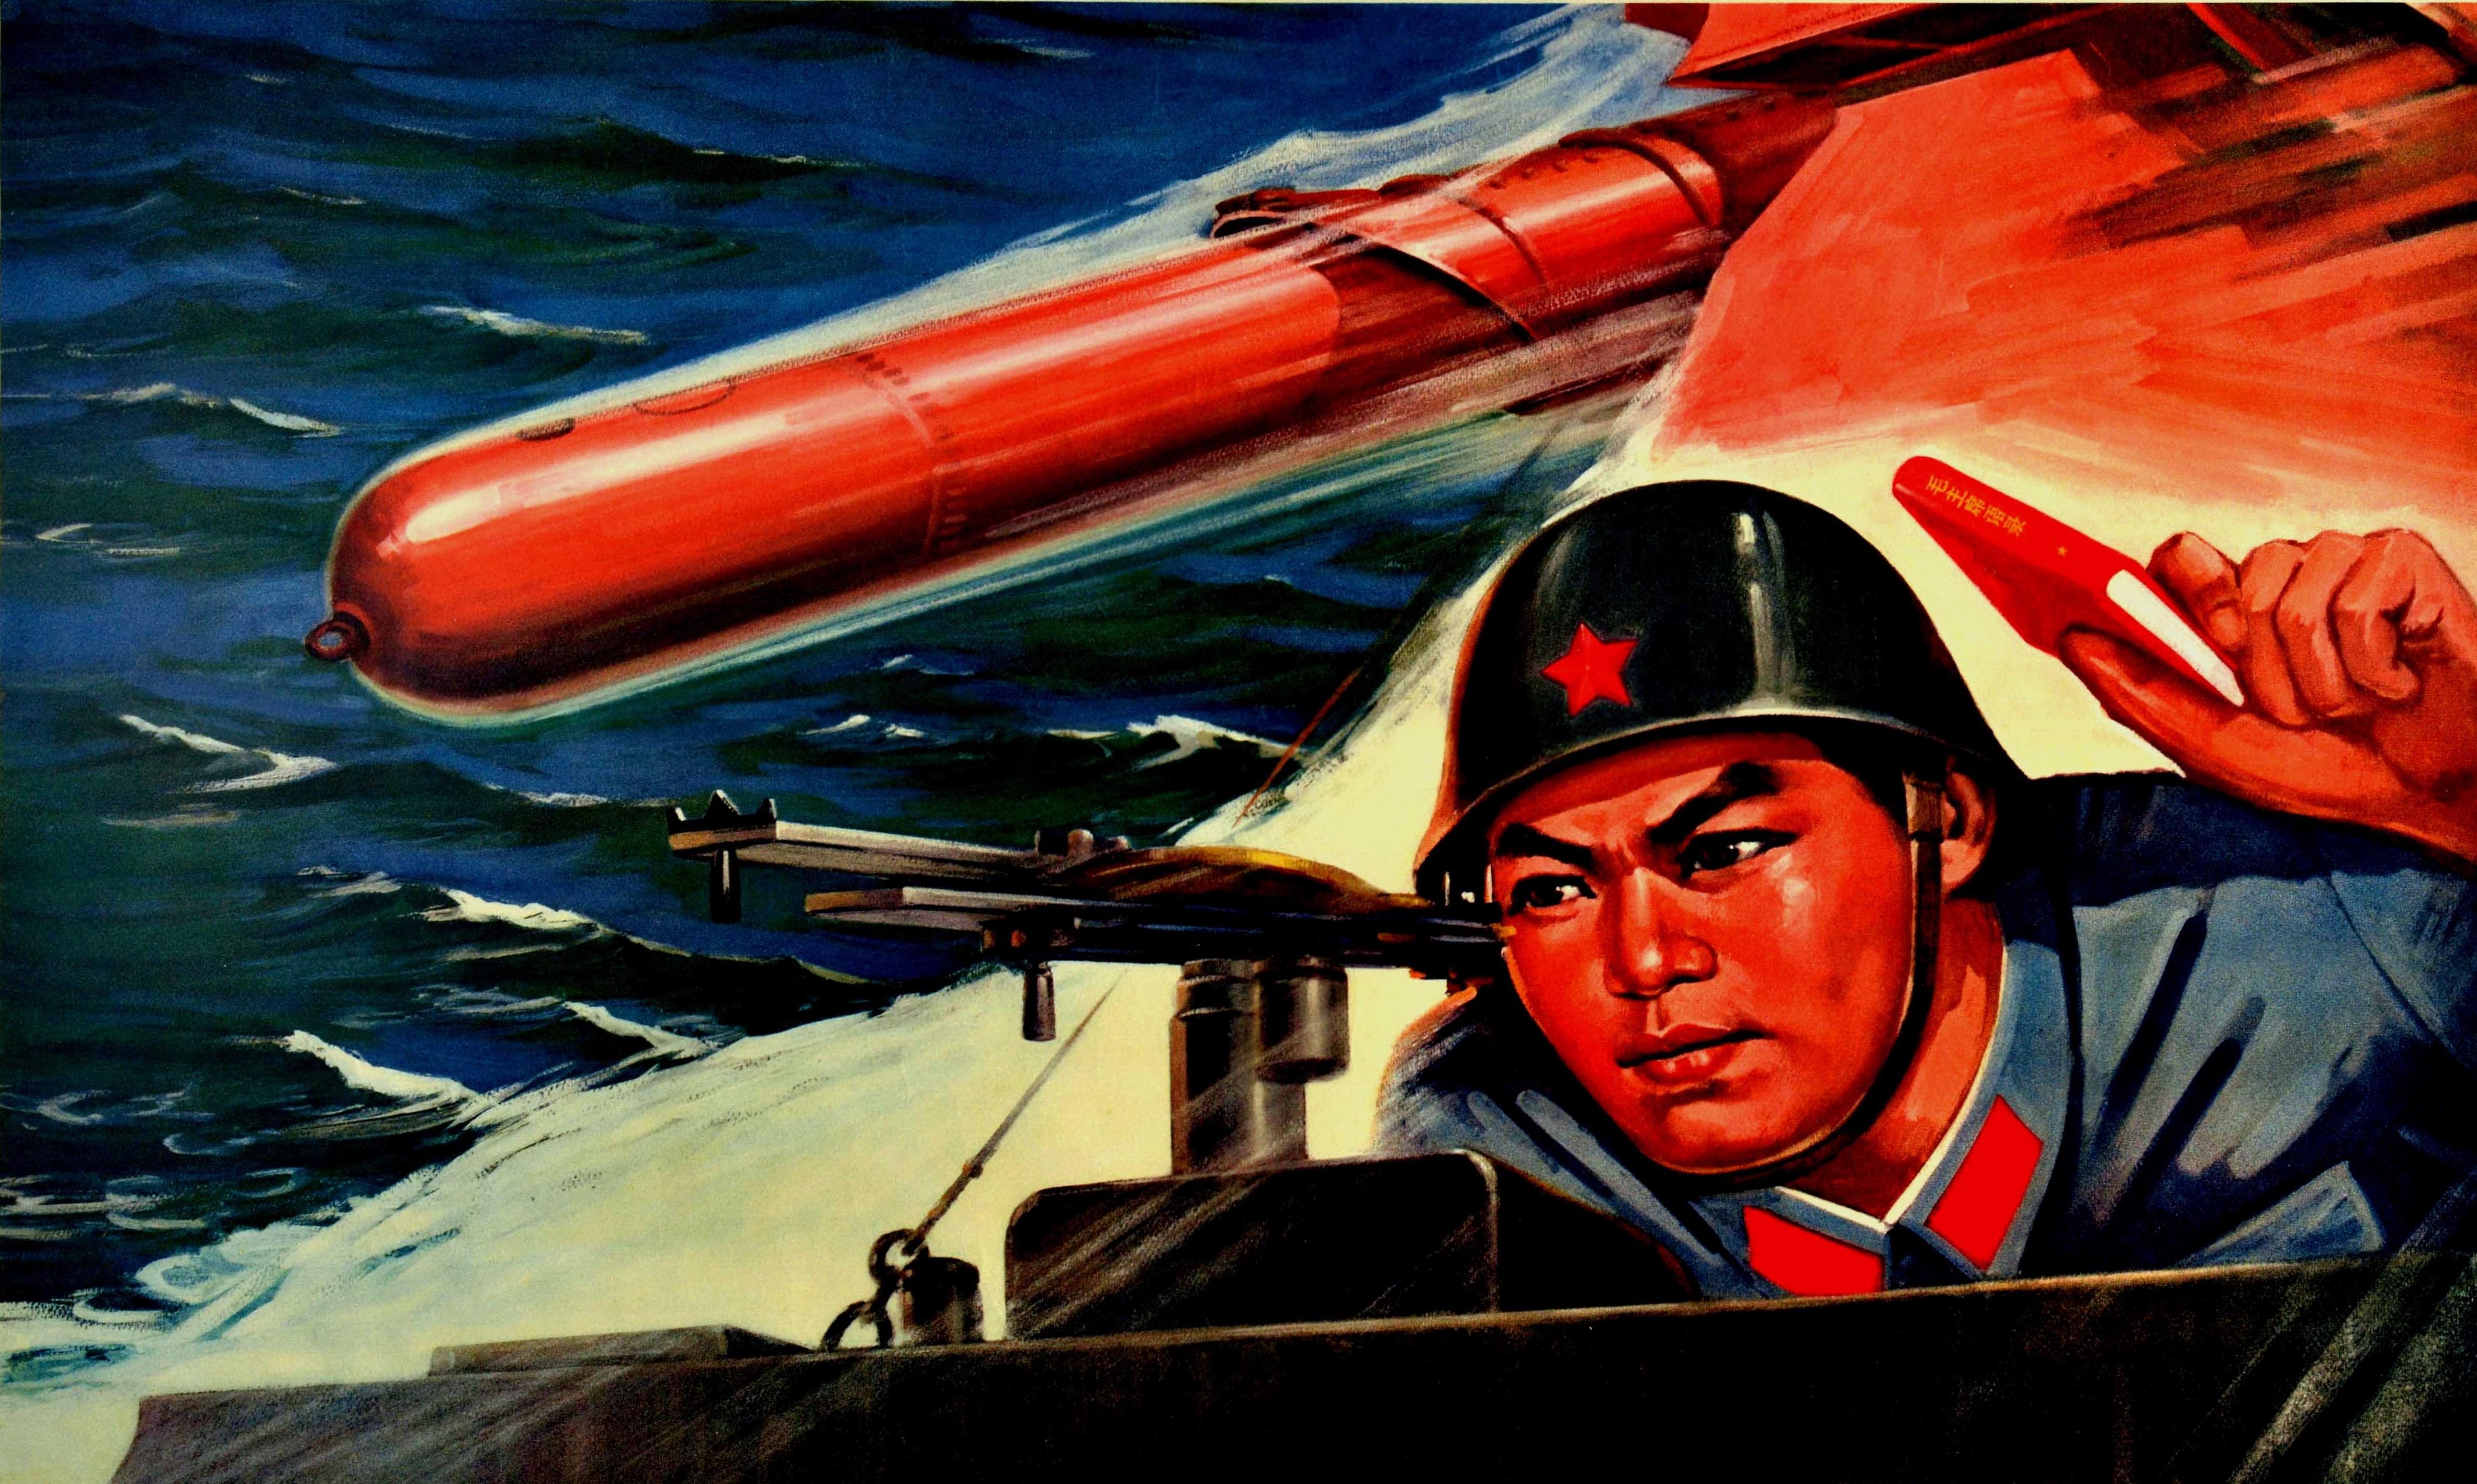 Original Vintage Poster Destroy Invading Enemies China Propaganda Navy Torpedo - Black Print by Unknown